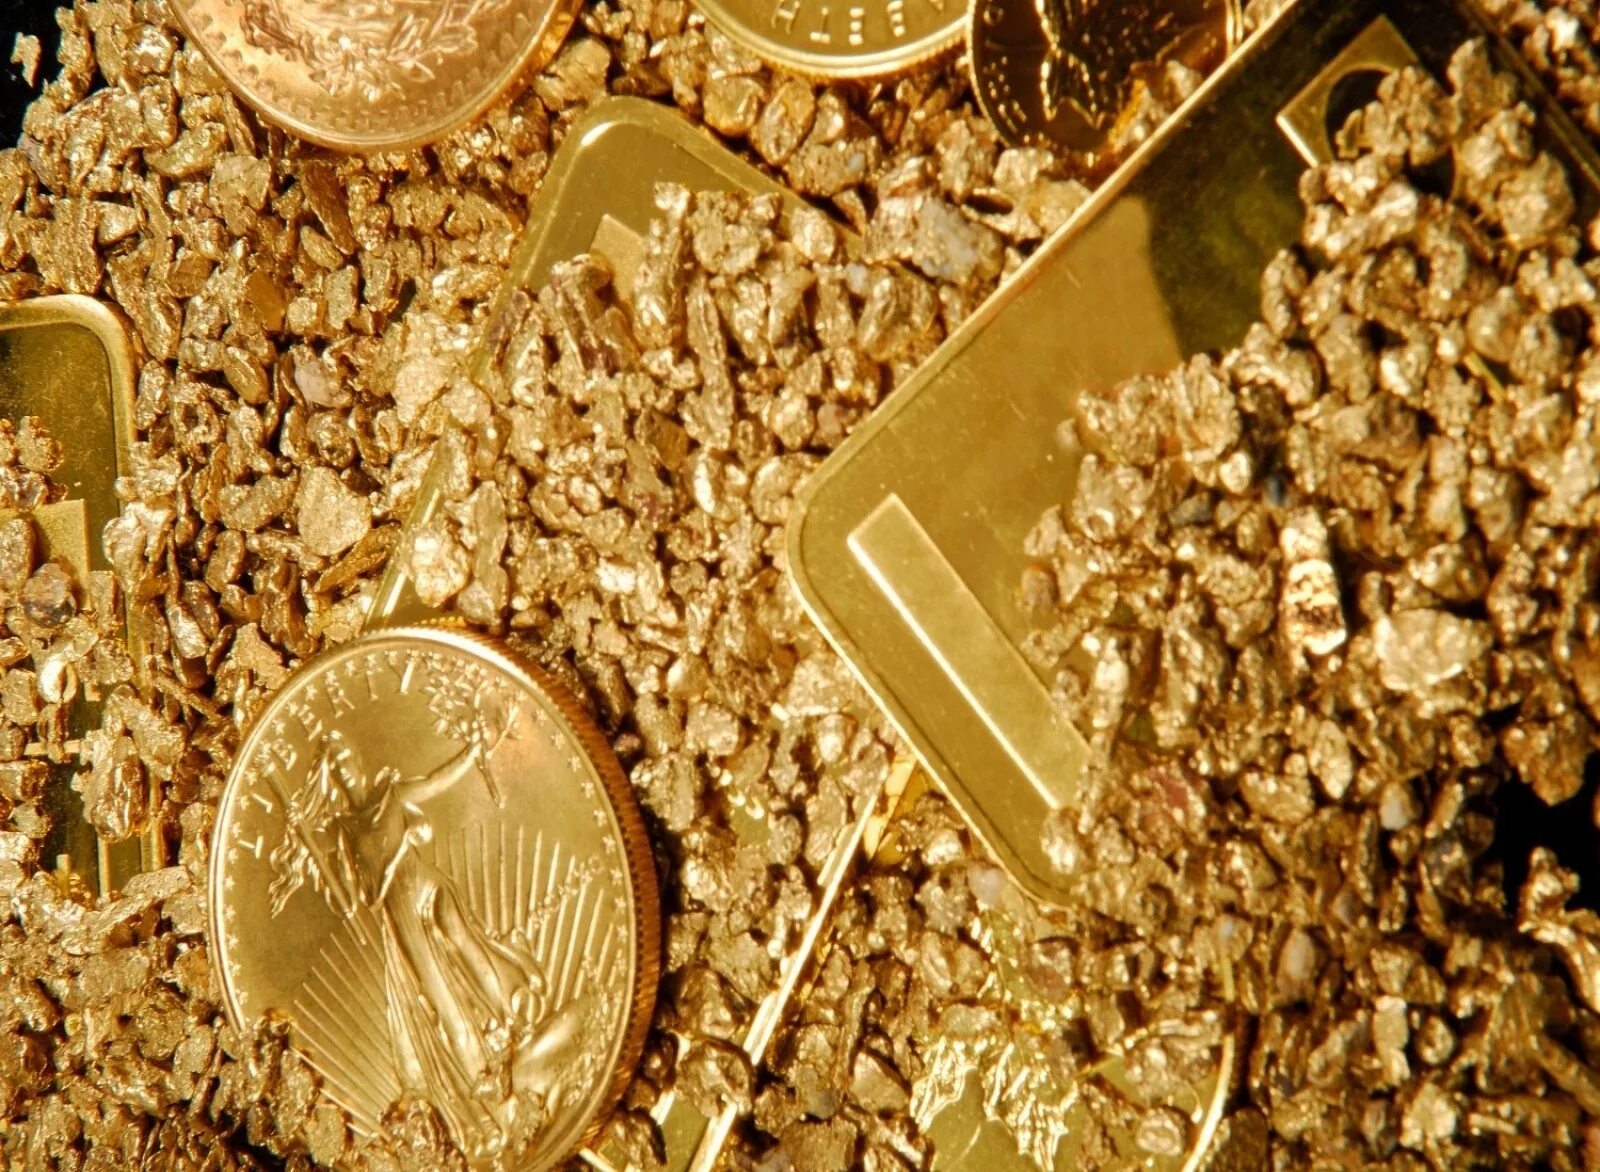 The world's gold. Монета Золотая. Золото богатство. Деньги золото богатство. Золотые монеты богатство.